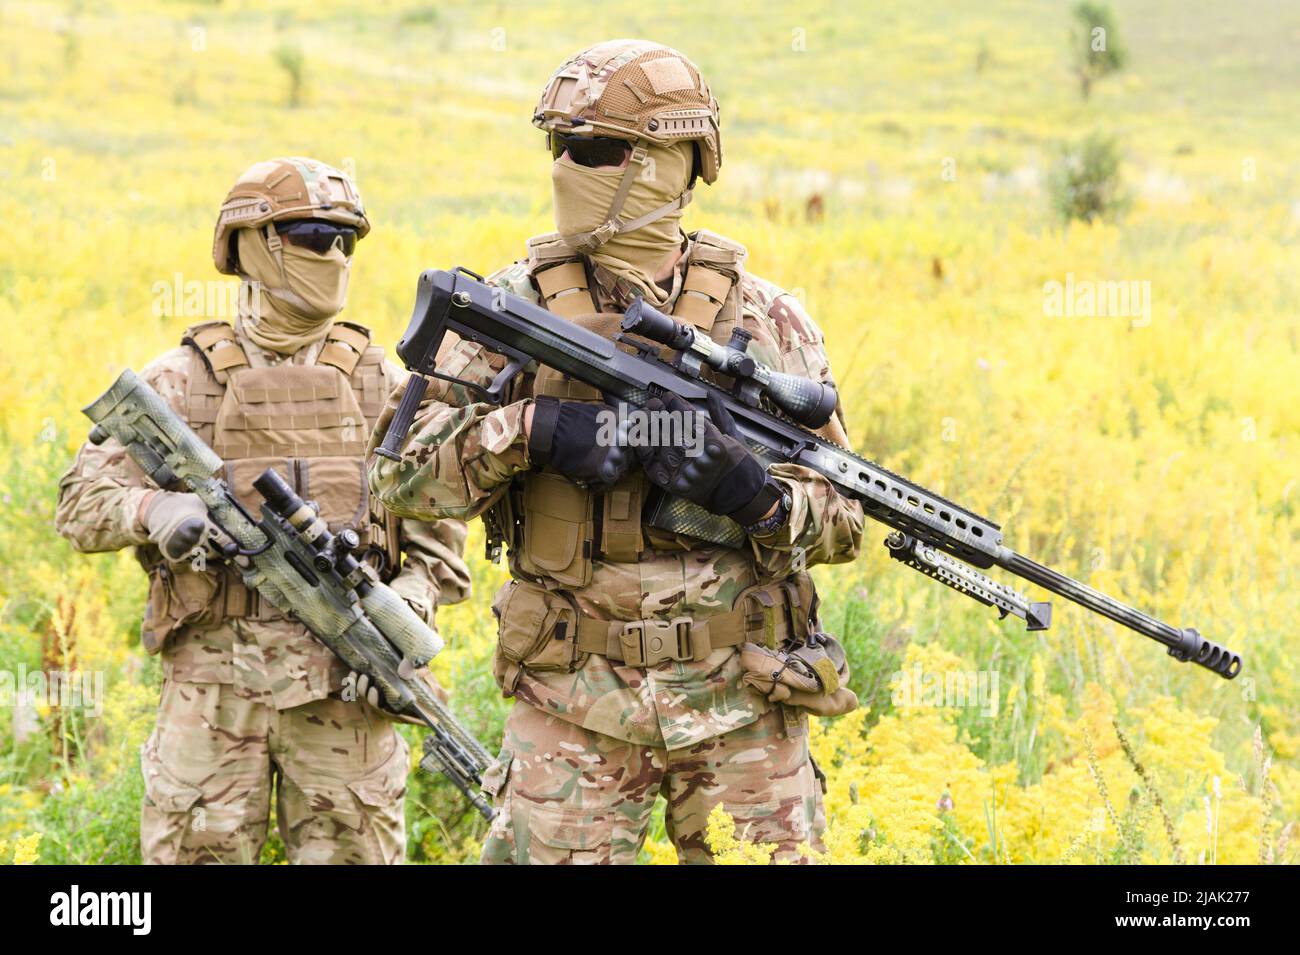 Deux soldats armés de fusils dans un champ en fleurs. Banque D'Images